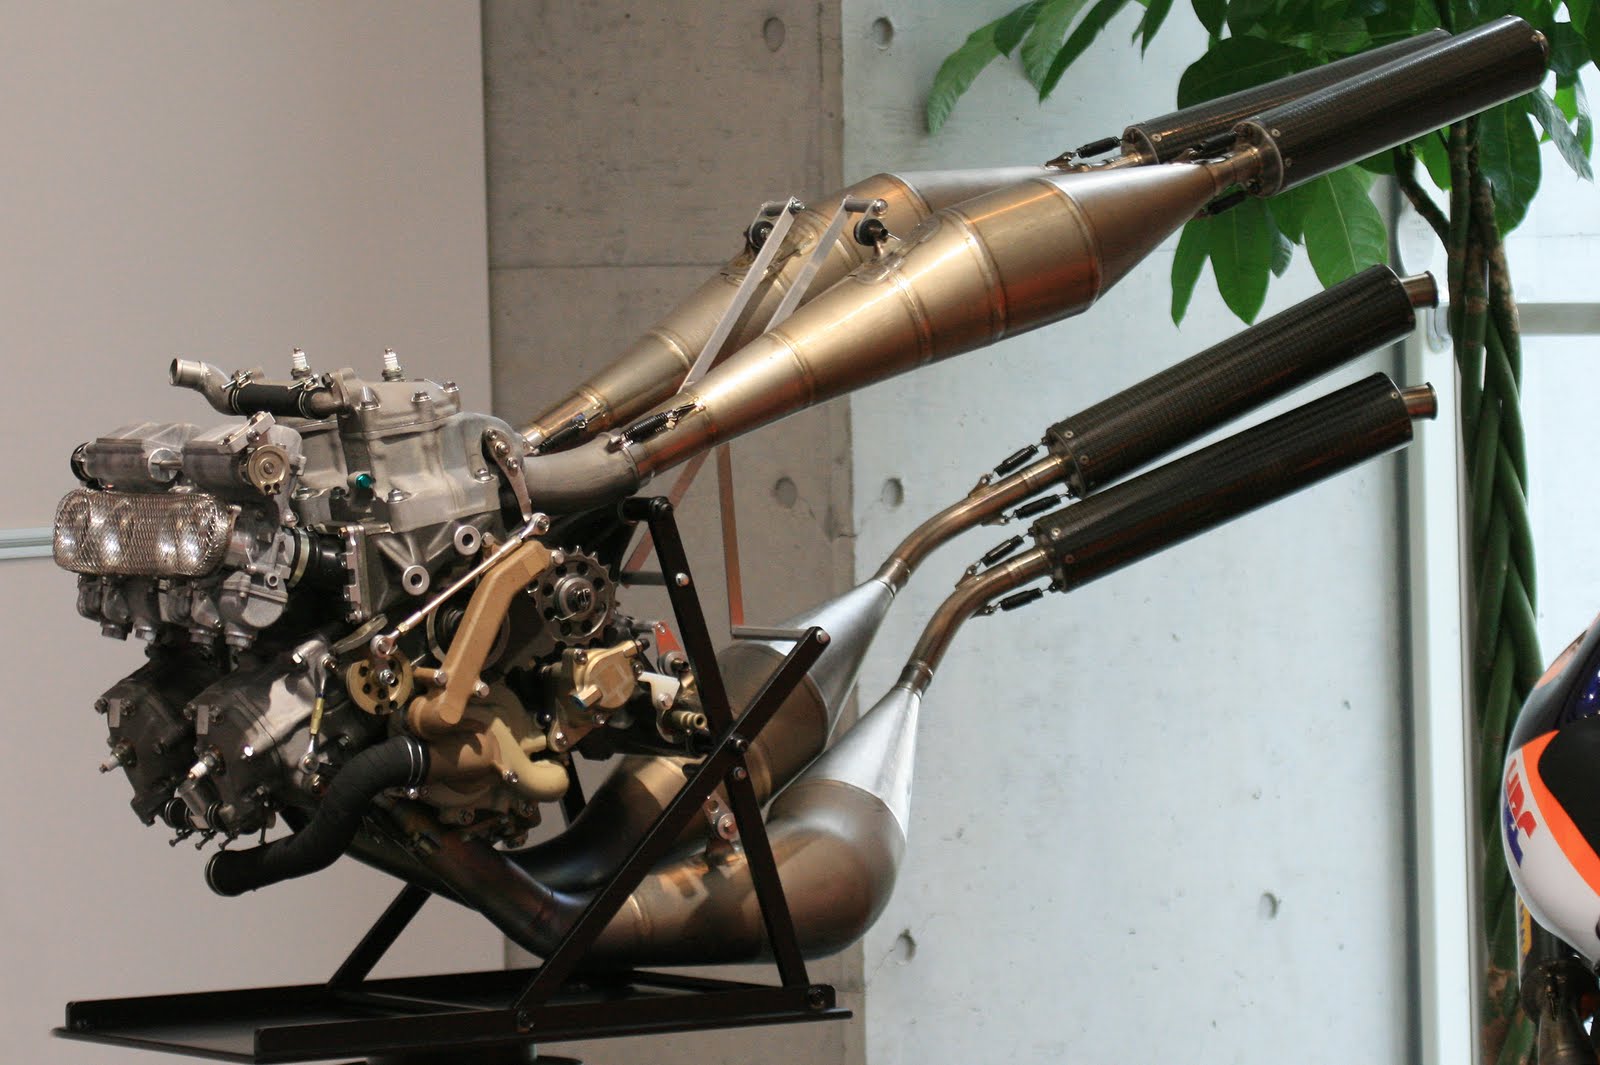 Honda_NSR500_engine_front_Honda_Collection_Hall.jpg